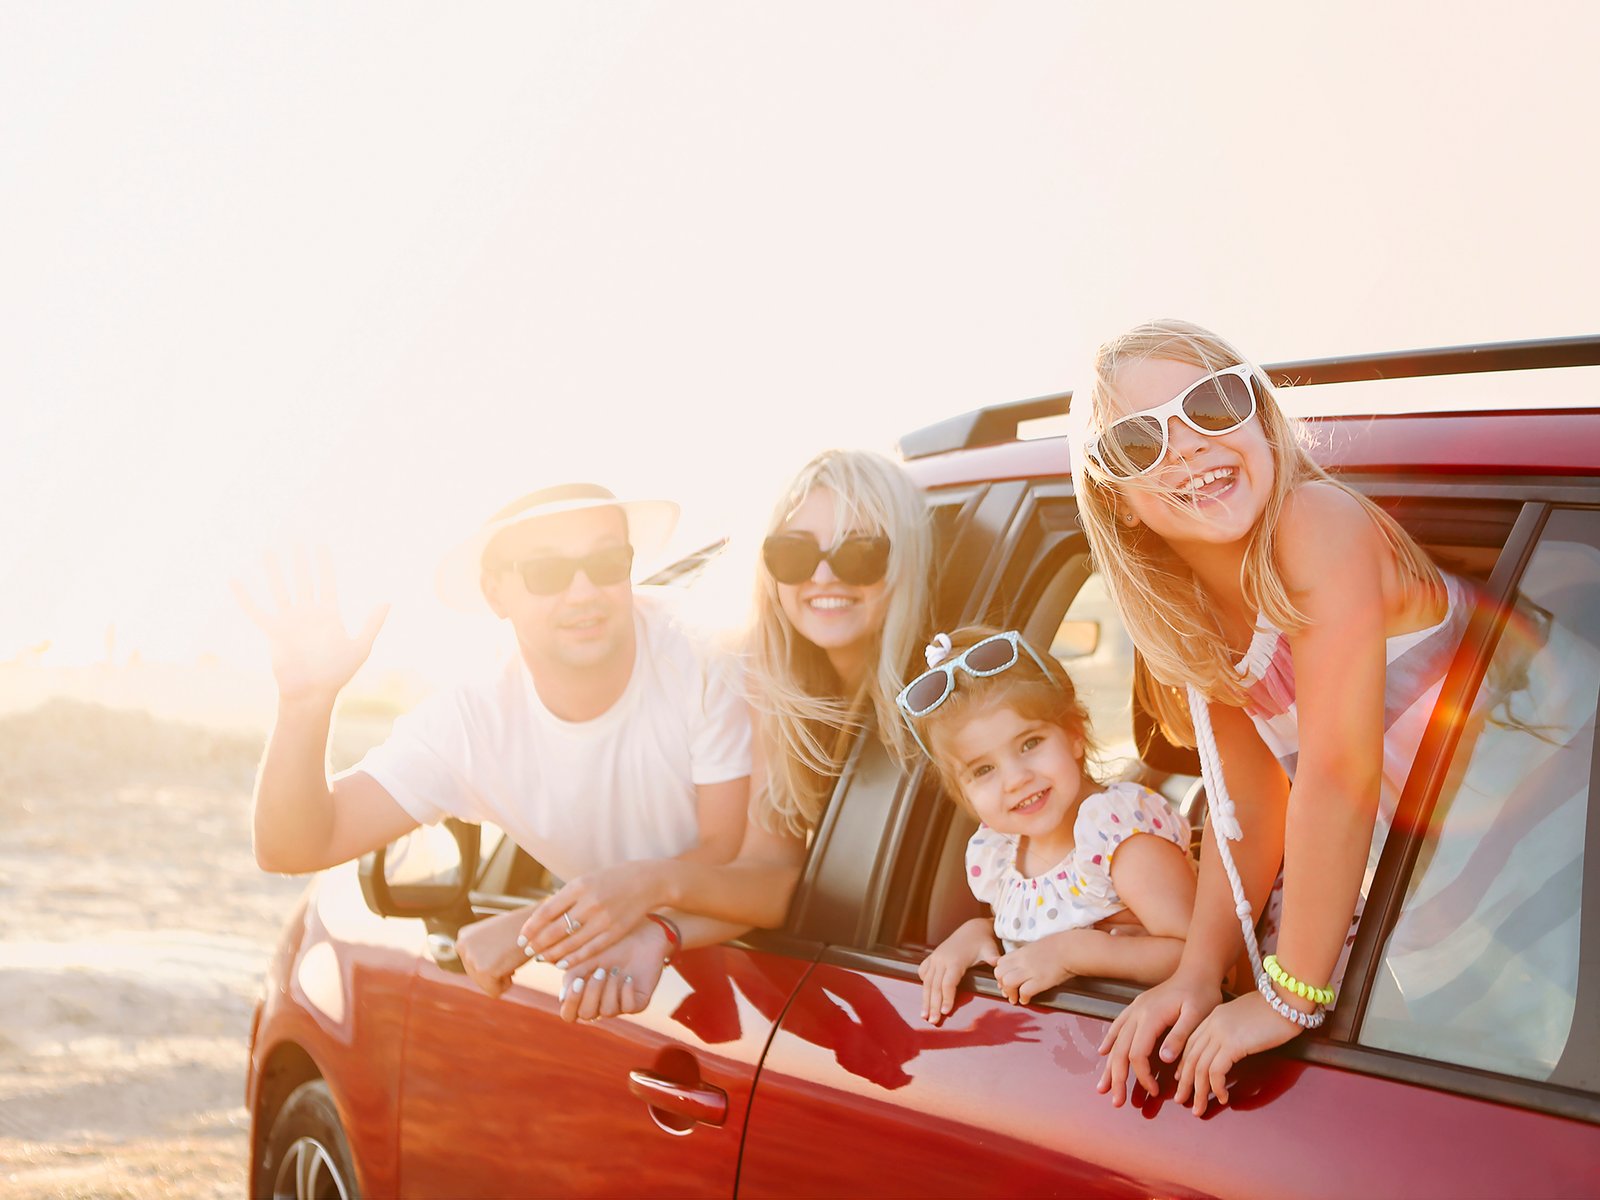 https://cdn2.familie.de/77/0e/6d/1ed0ec579c334572d241fd4eed_ZmMgODAwMDgwMDBmZmZmIDE2MDAgMTIwMAM3ZTEwNWM0MjRkZQ==_happy-smiling-family-with-daughters-in-the-car-with-sea-background.jpg